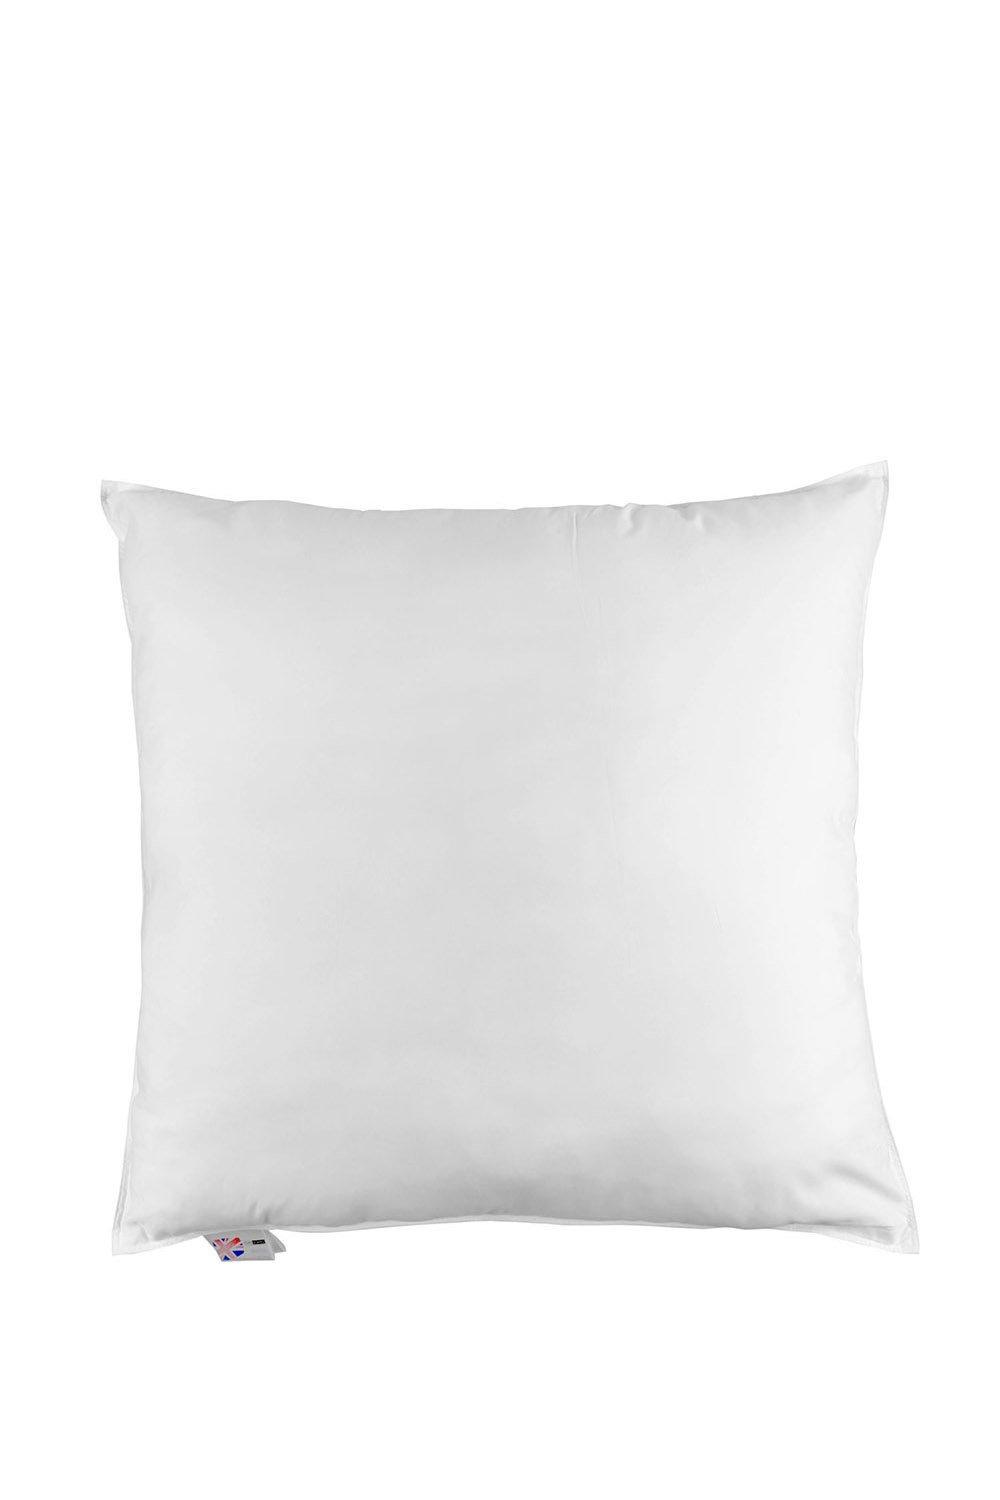 Goose Down Euro Continental Square Pillow  - 80cm x 80cm (32